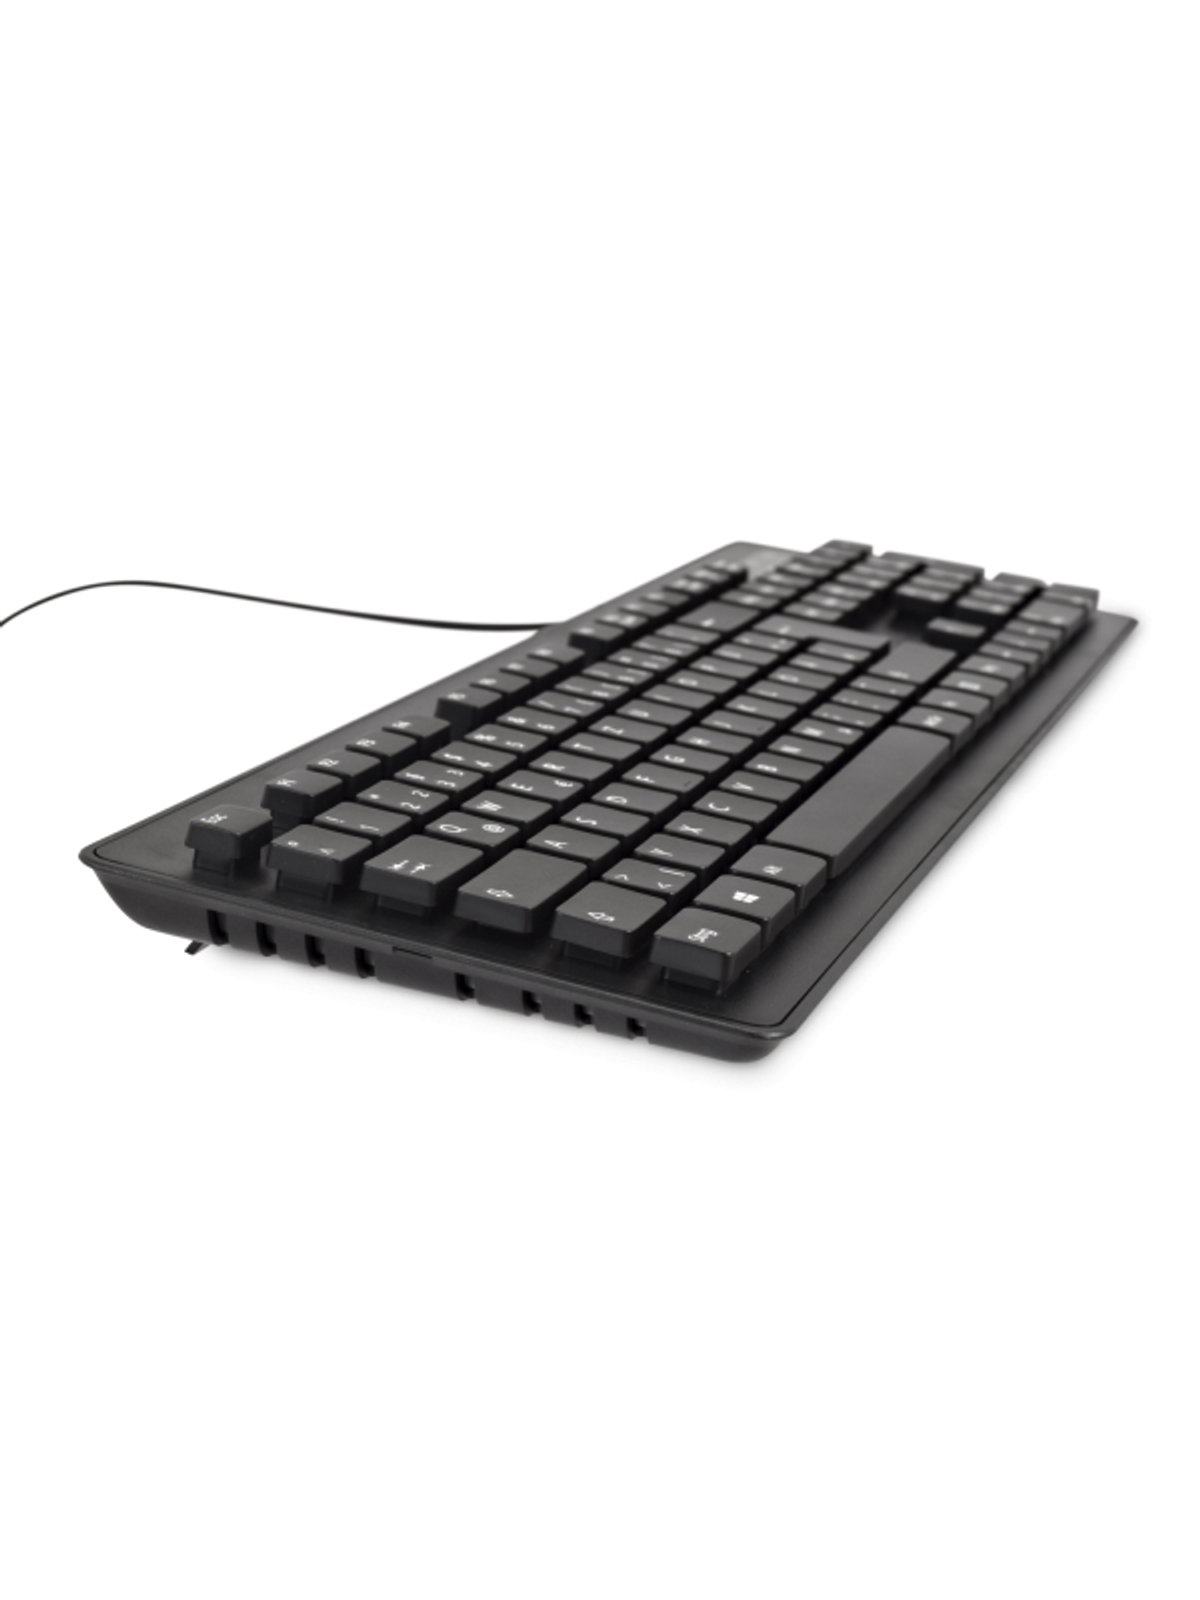 Tastatur Maus V7 Set, Schwarz CKU700DE,